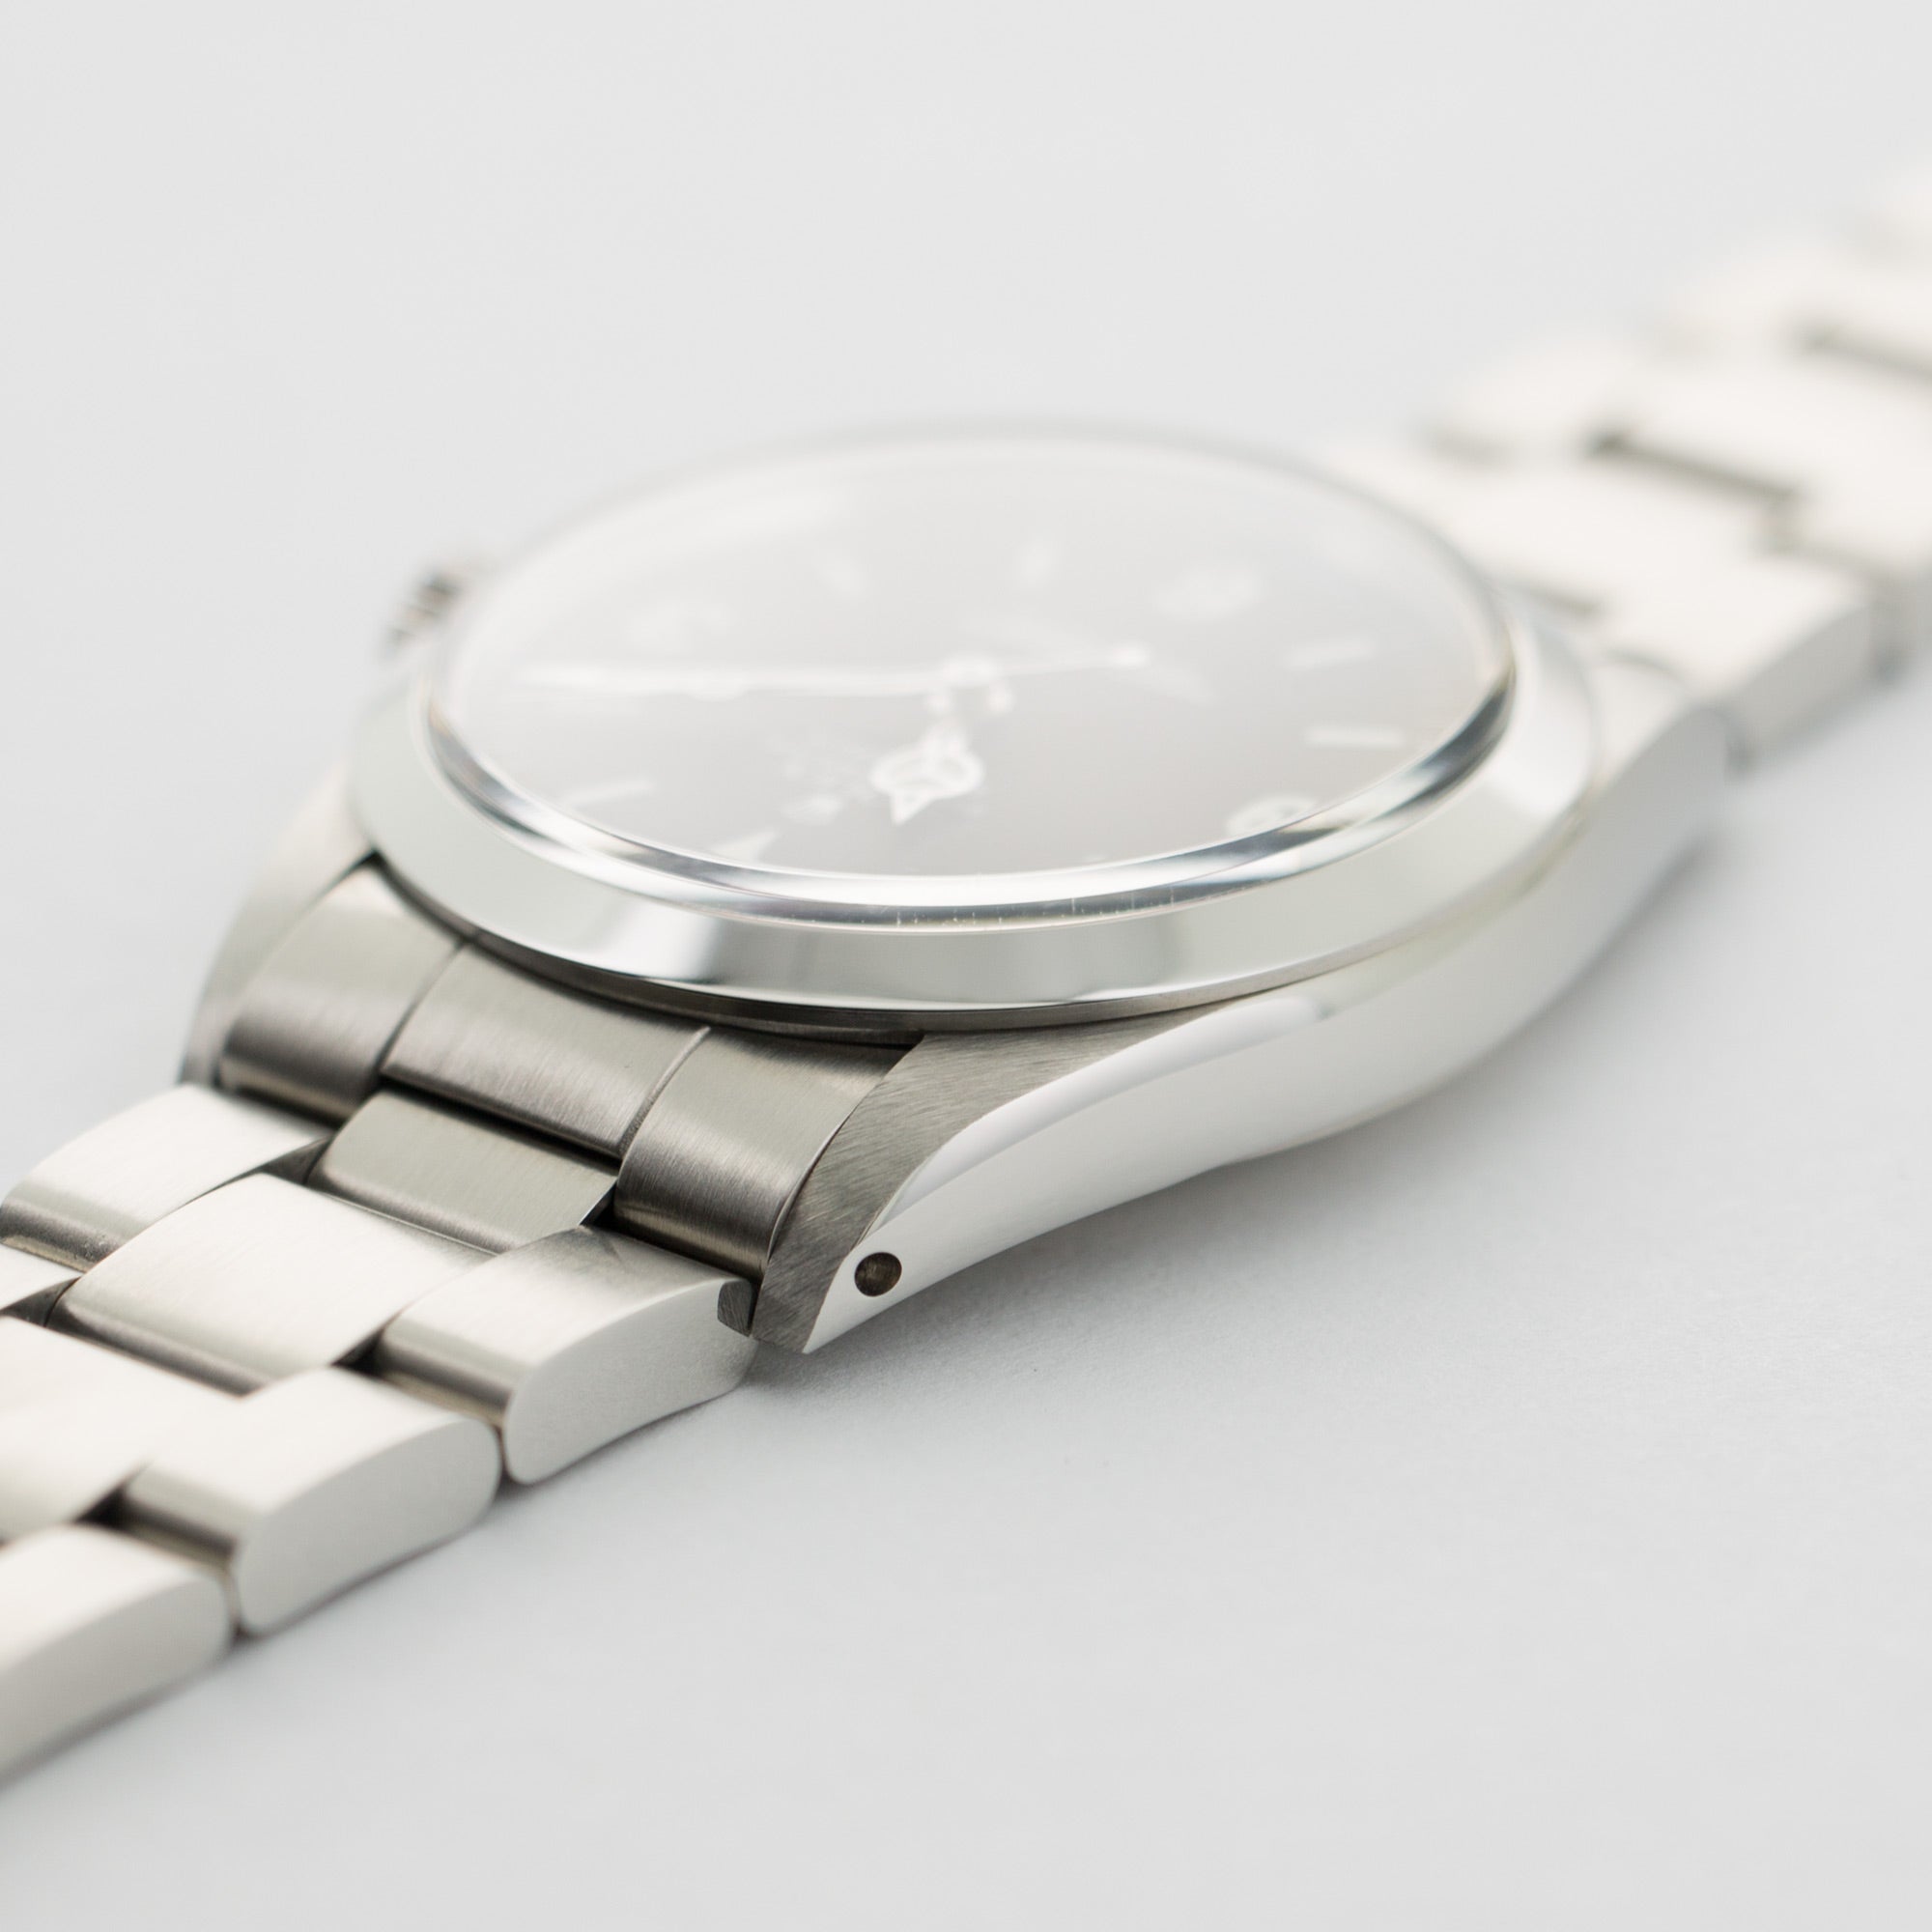 Rolex - Rolex Explorer R-Series Watch Ref. 1016 with Paper - The Keystone Watches